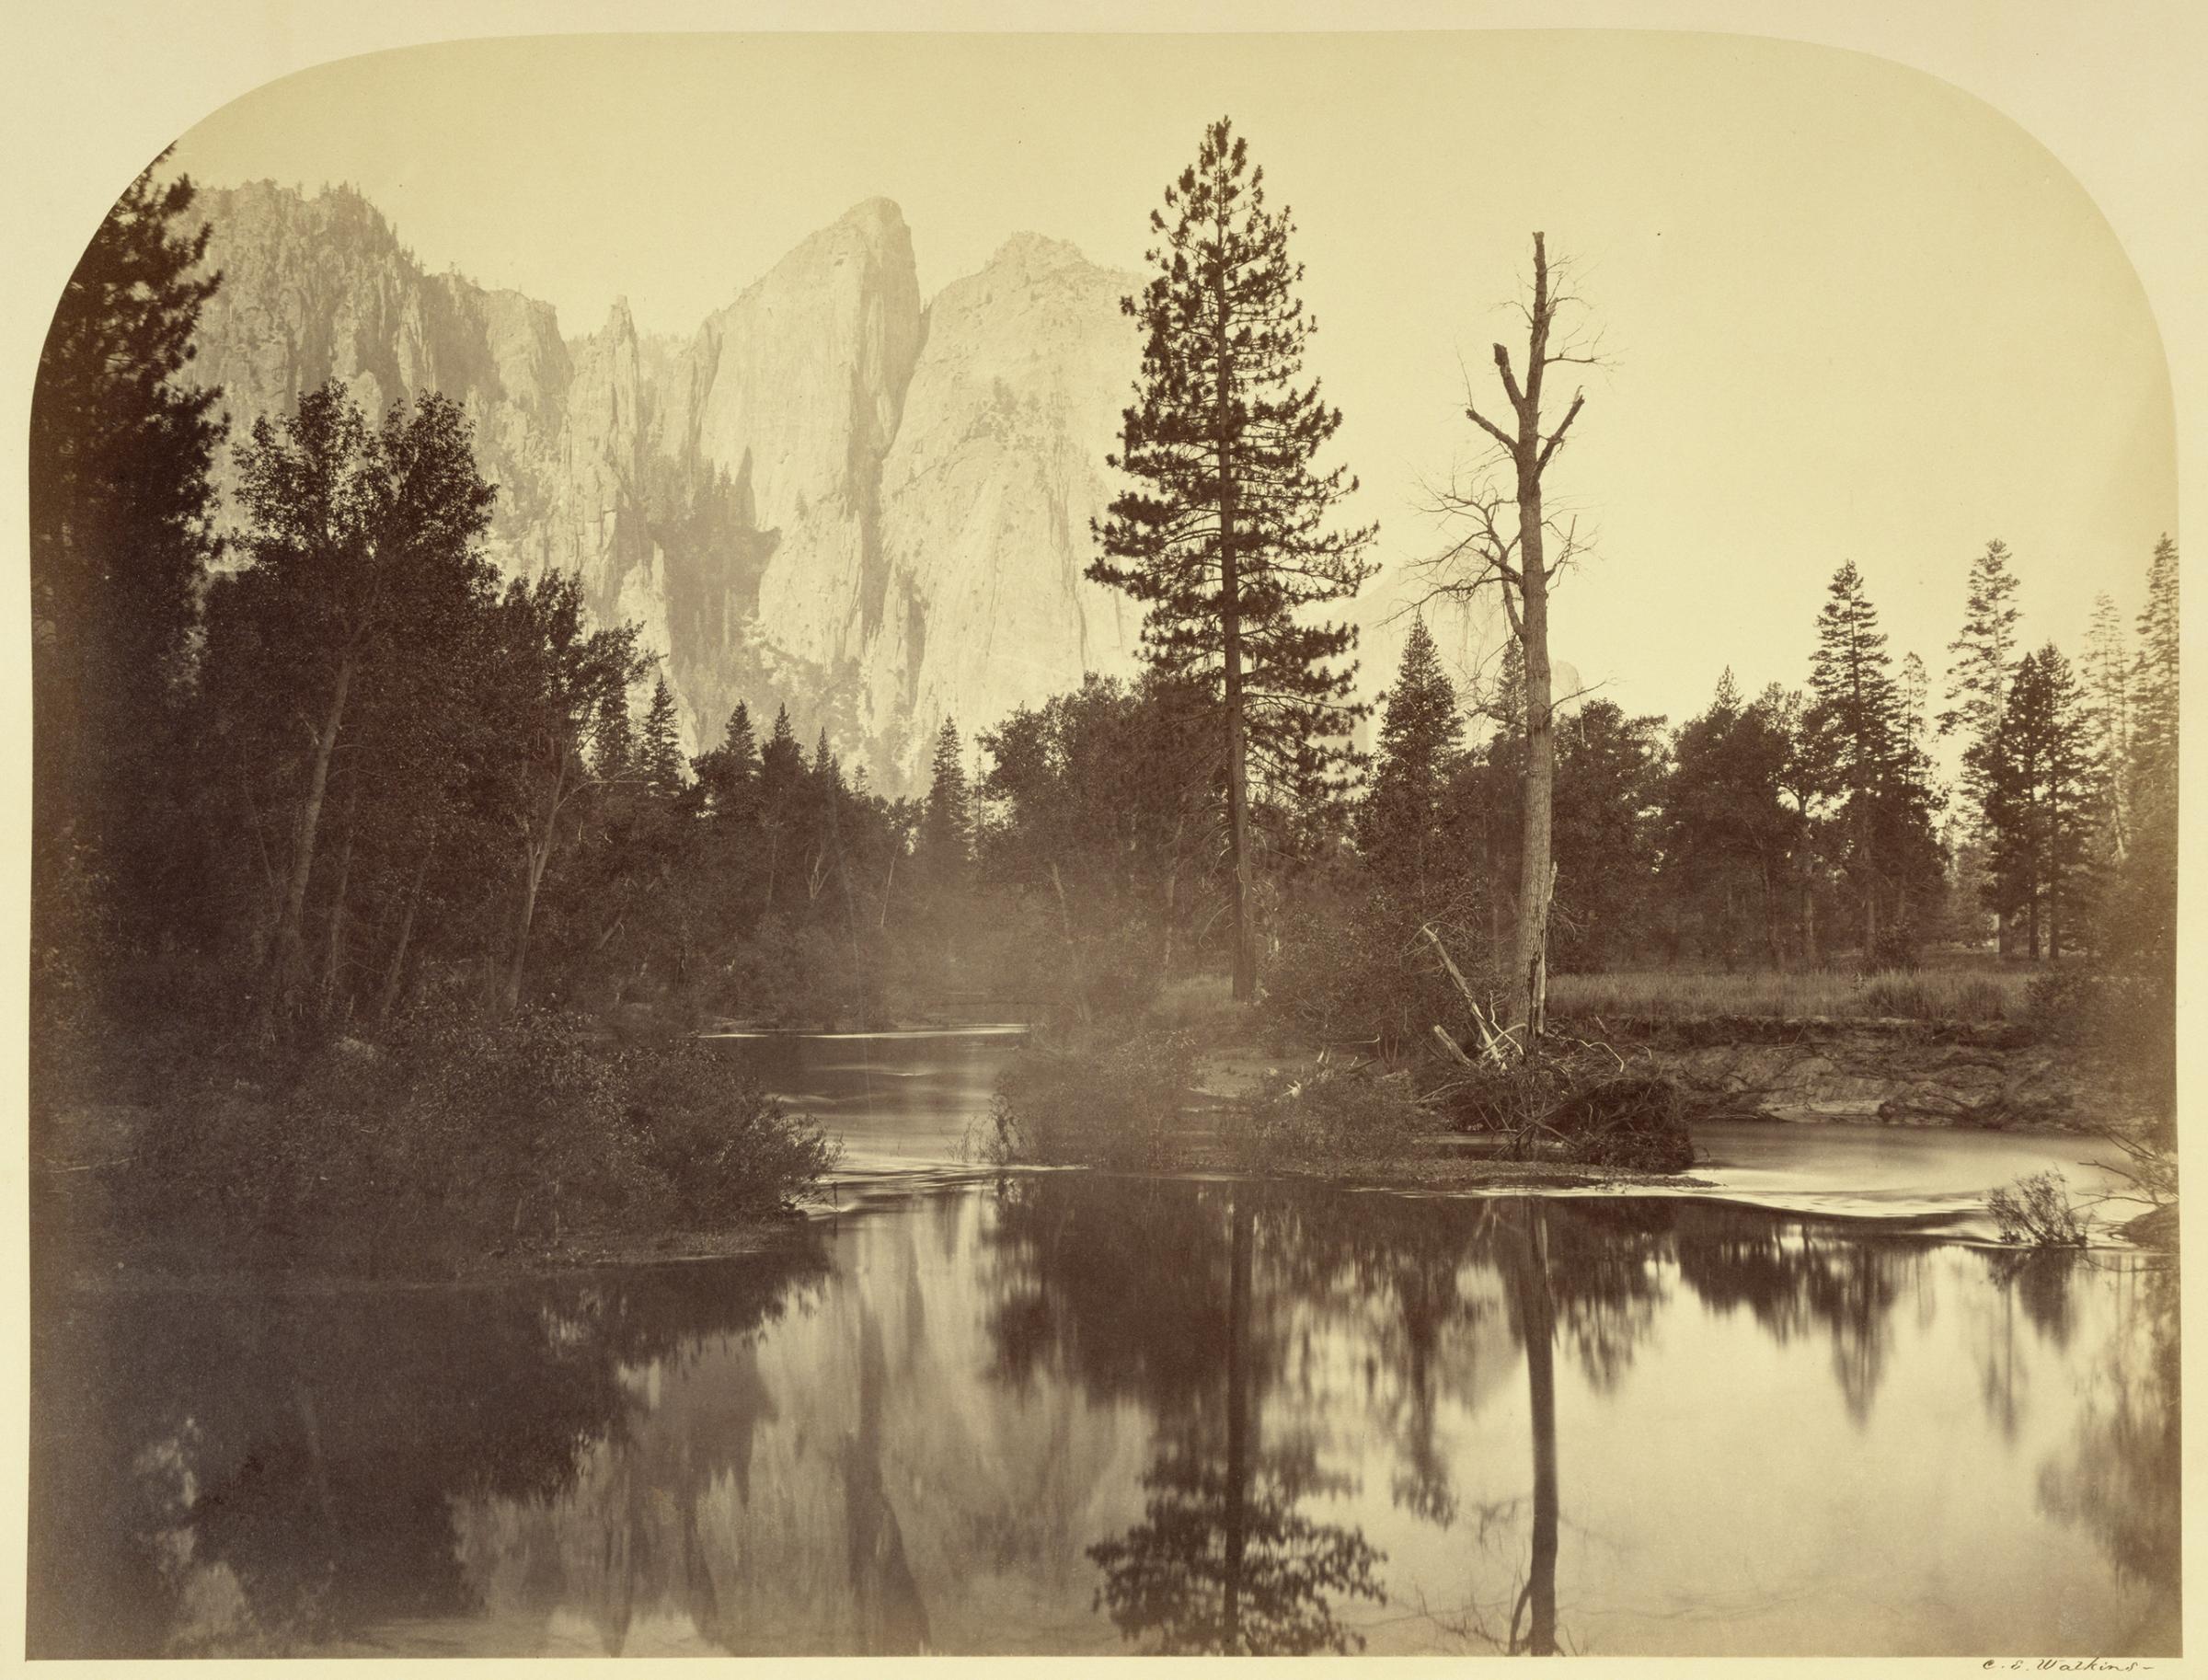 Yosemite national park photographed by Carleton Watkins in 1861.